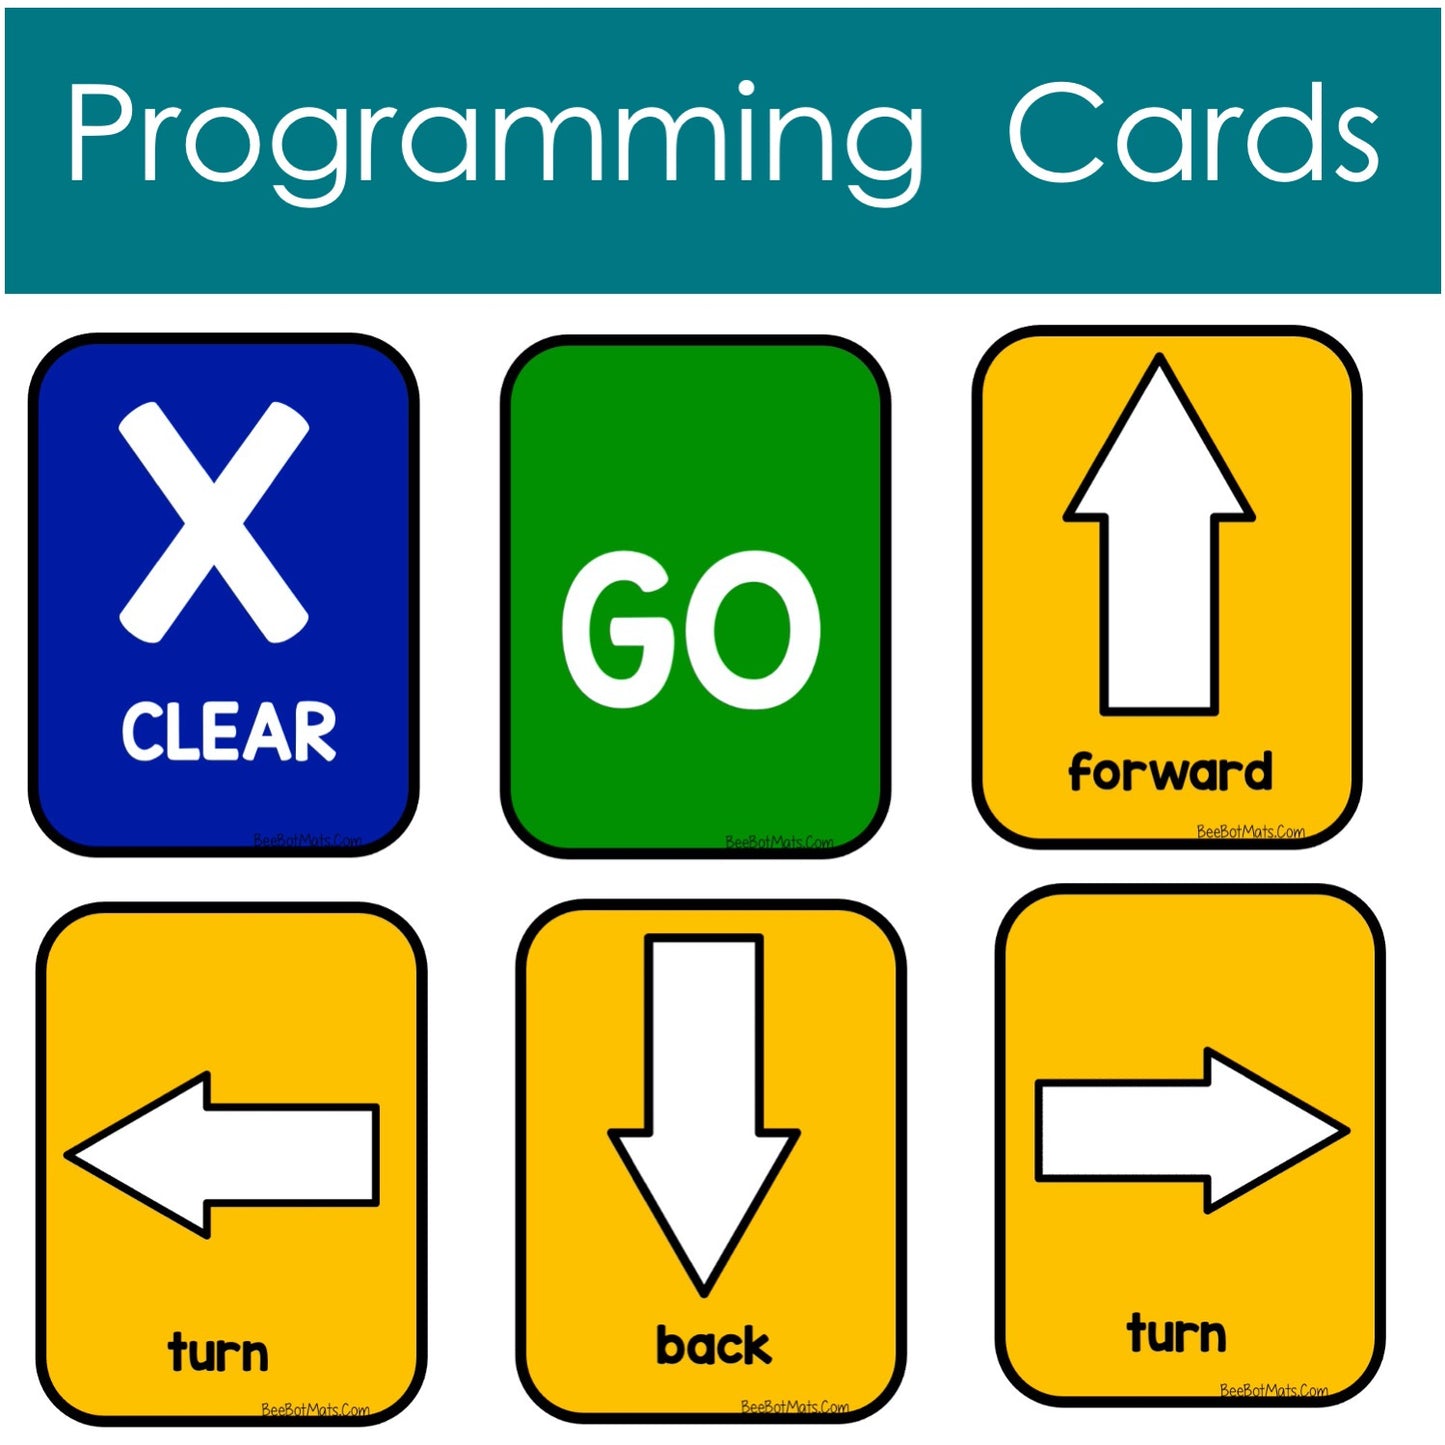 Programming Cards